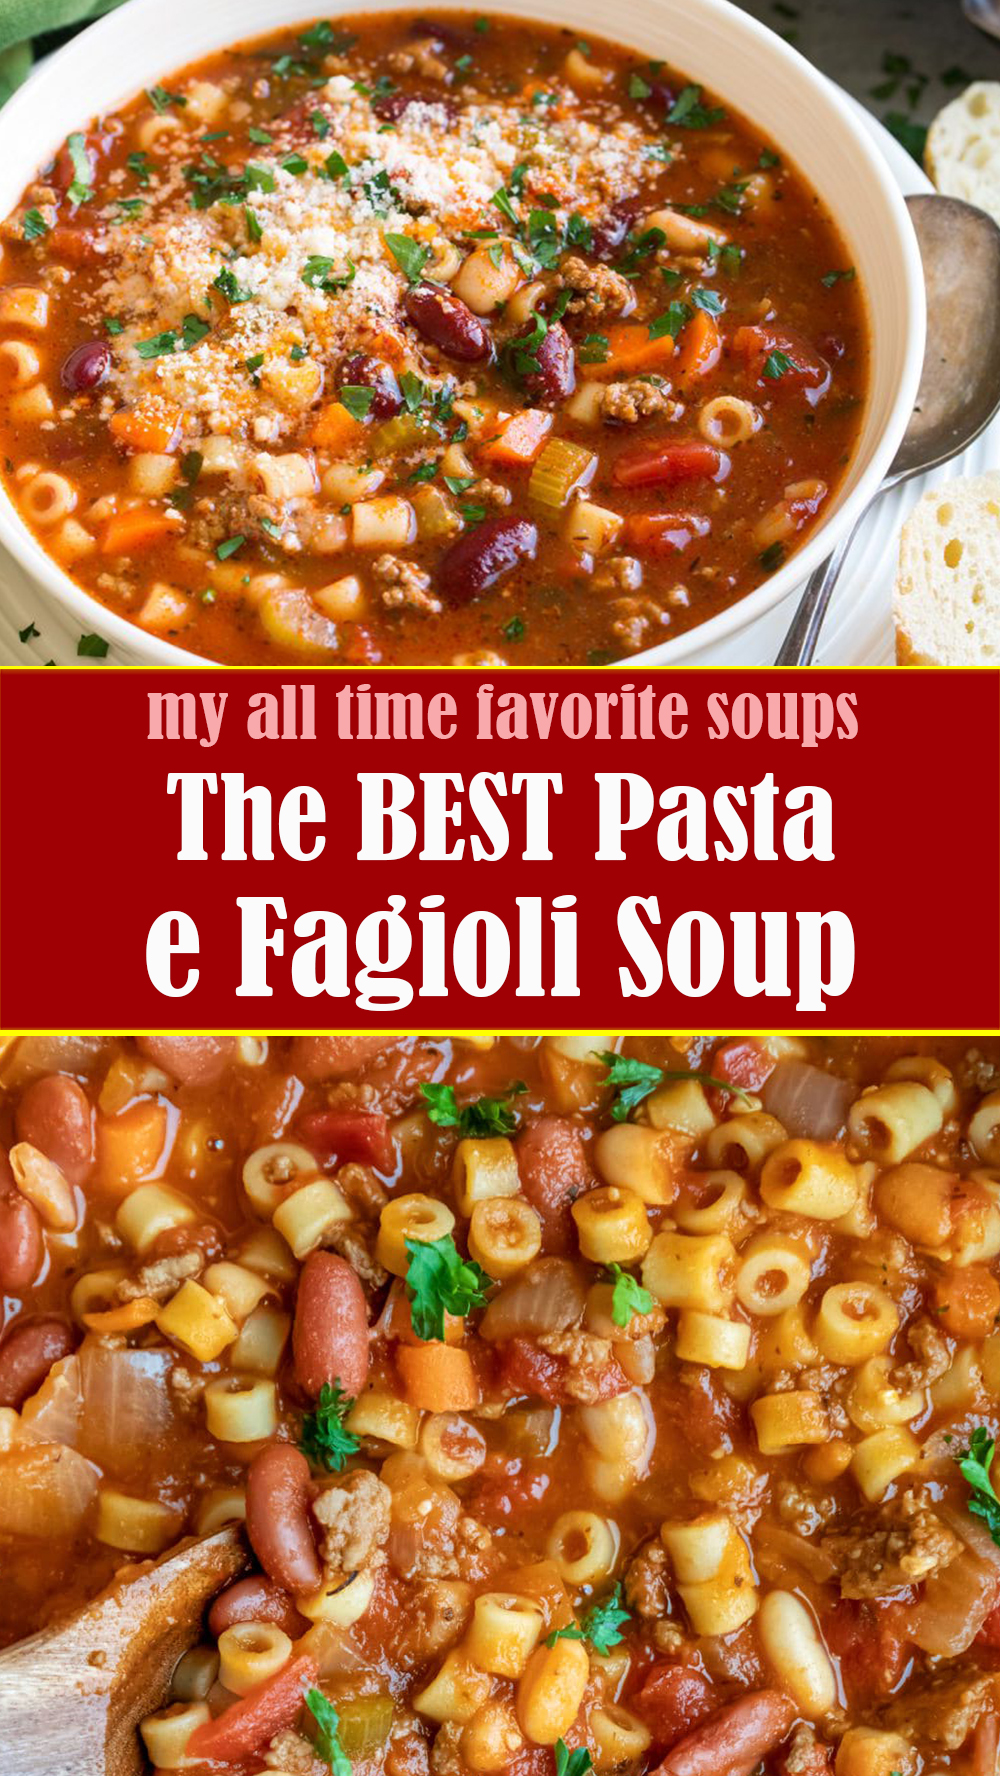 The BEST Pasta e Fagioli Soup